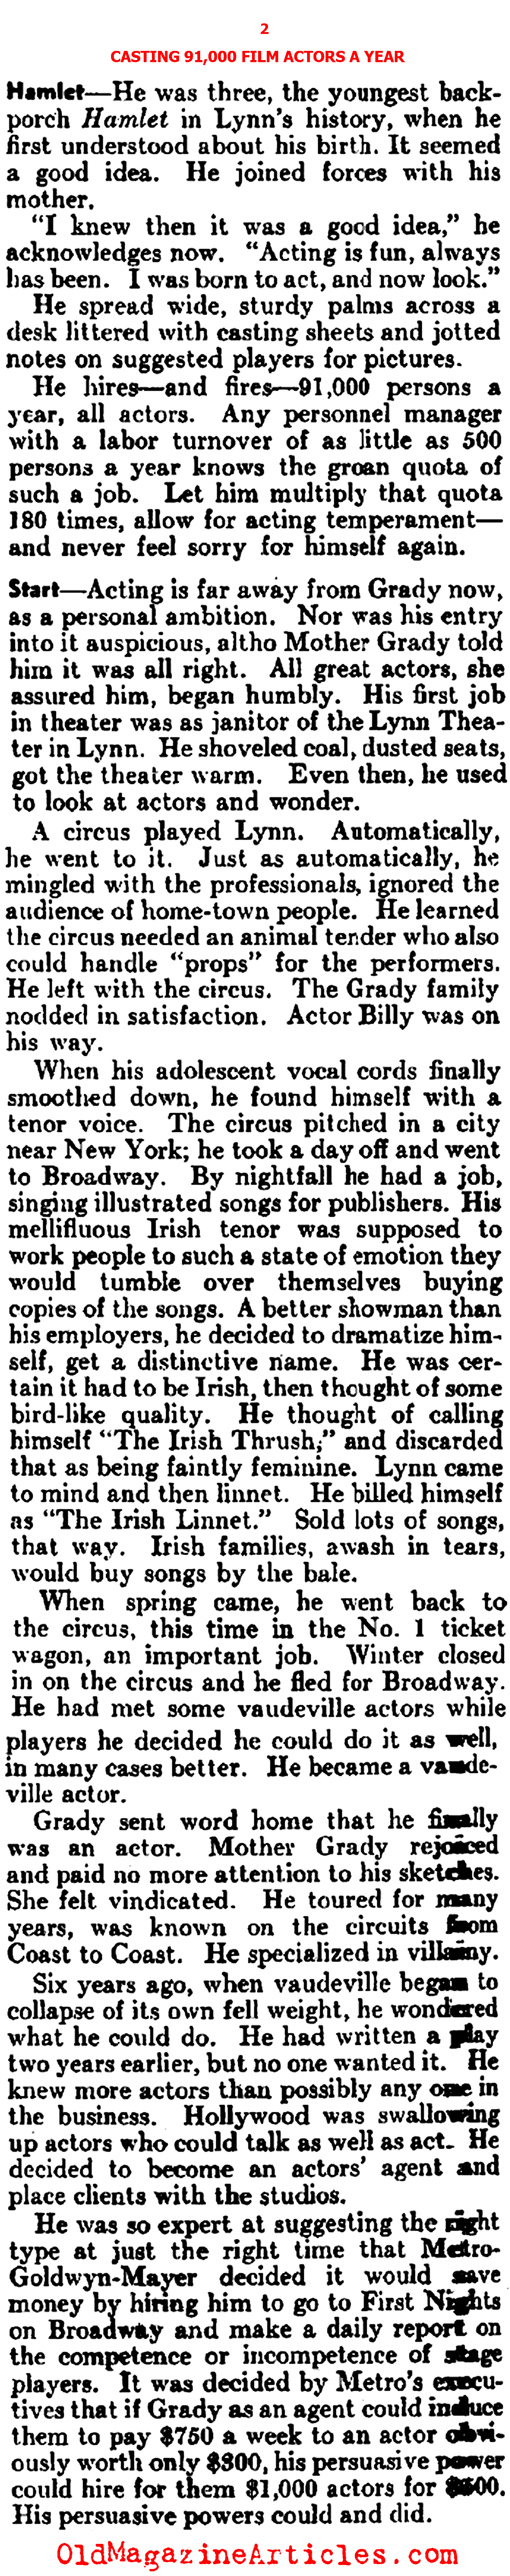 M.G.M. Casting Director Billy Grady Tells All (Literary Digest, 1936)